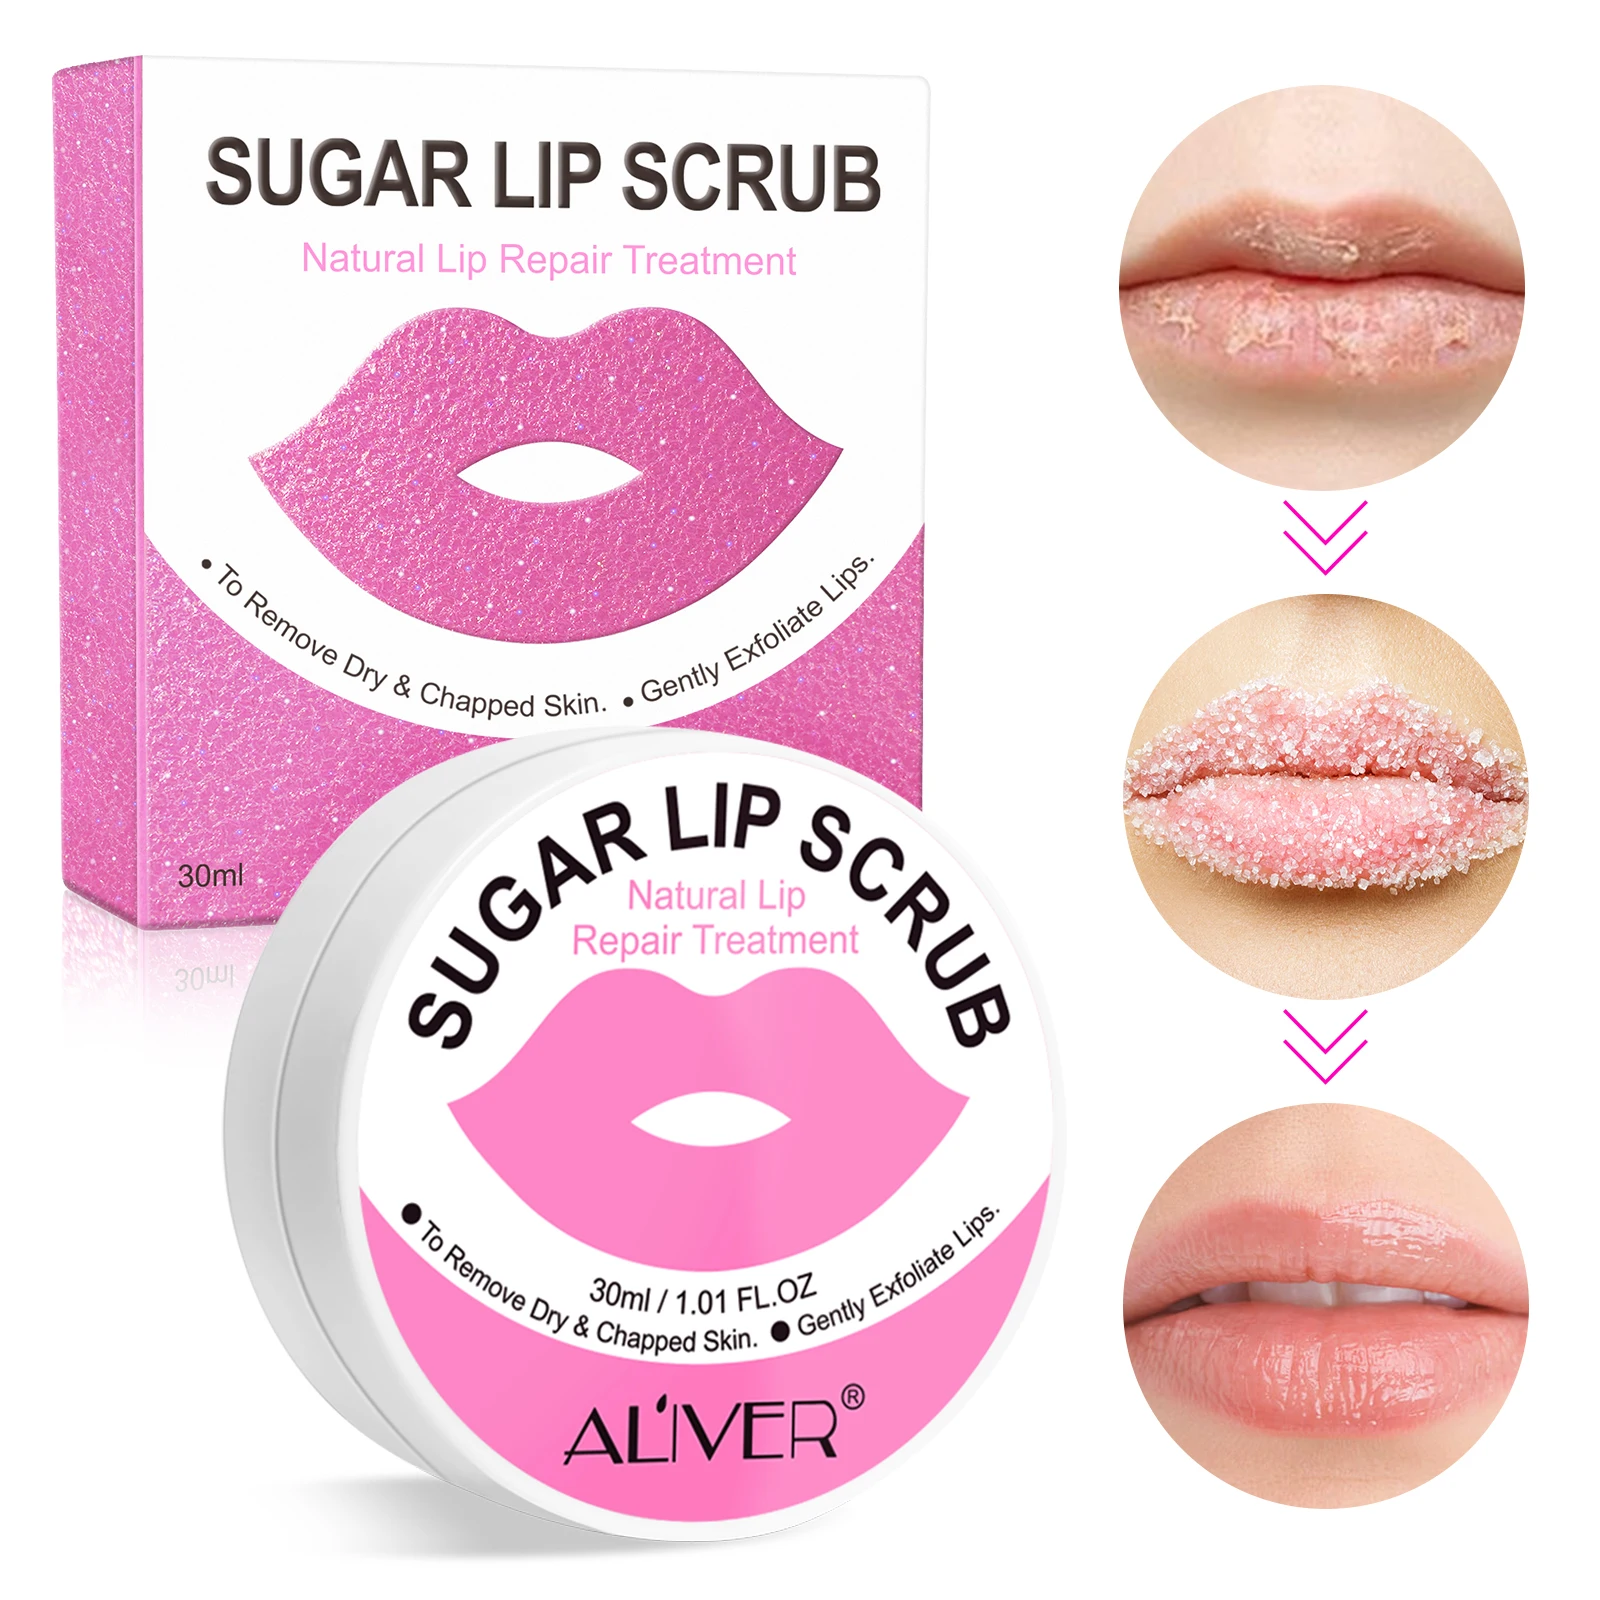 

Aliver New Arrival Natural Lip Repair Treatment Gently Exfoliate Moisturize Soften Lips Private Label Sugar Lip Scrub